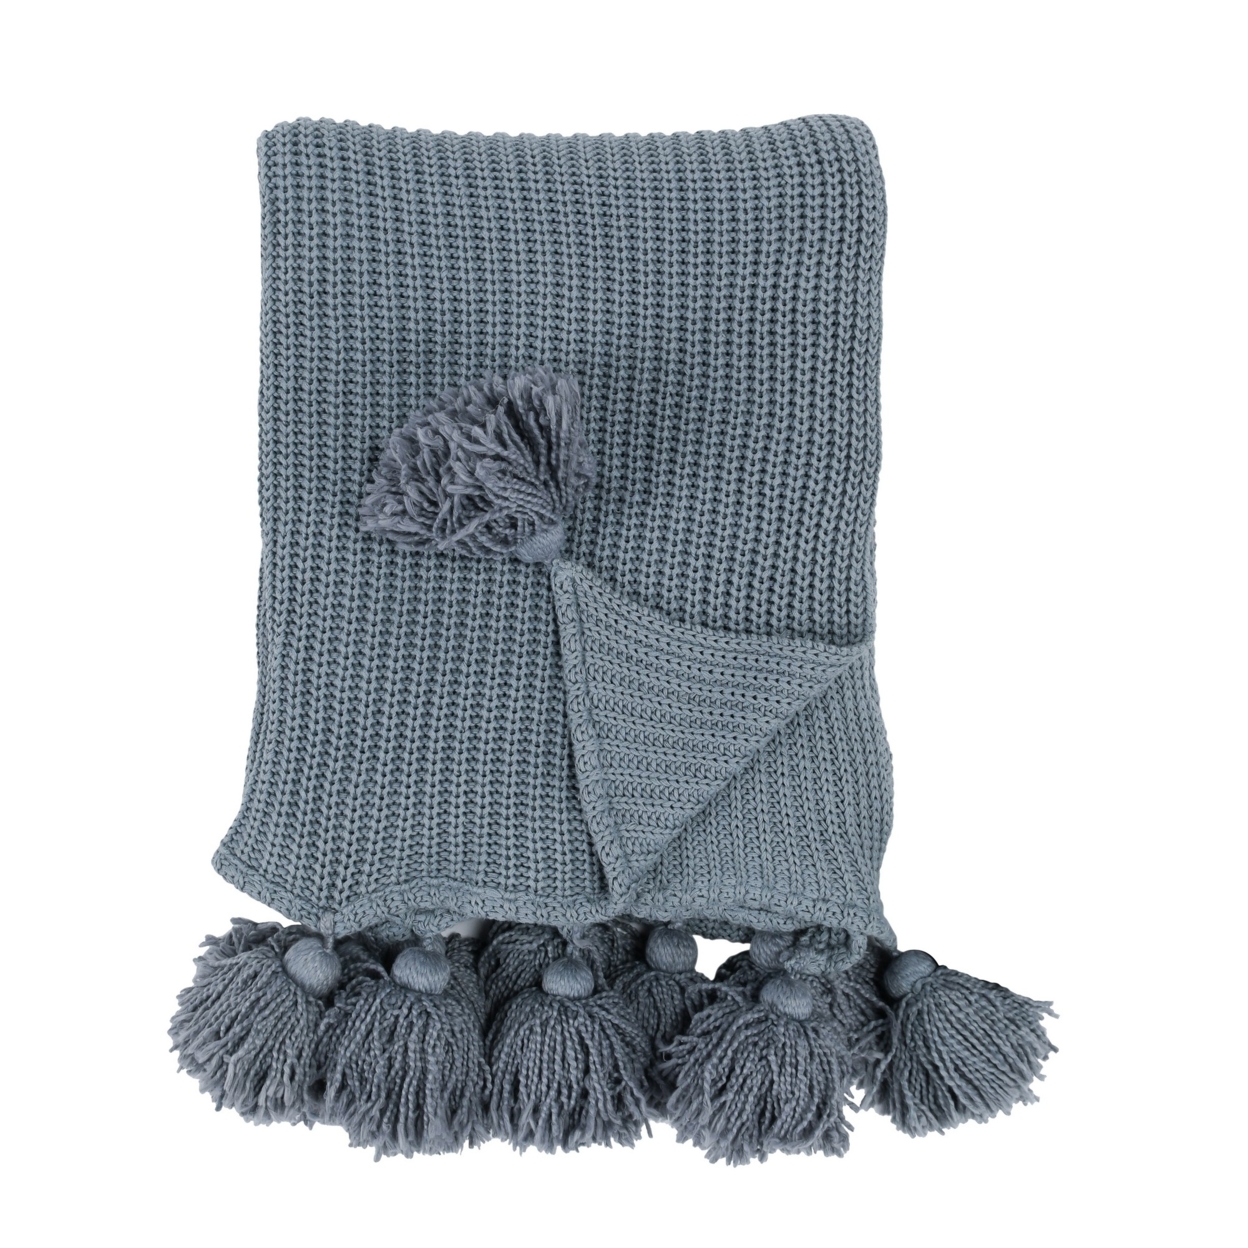 Dee 50 X 70 Soft Cotton Throw Blanket, Knitted Design, Woven Tassels, Blue- Saltoro Sherpi